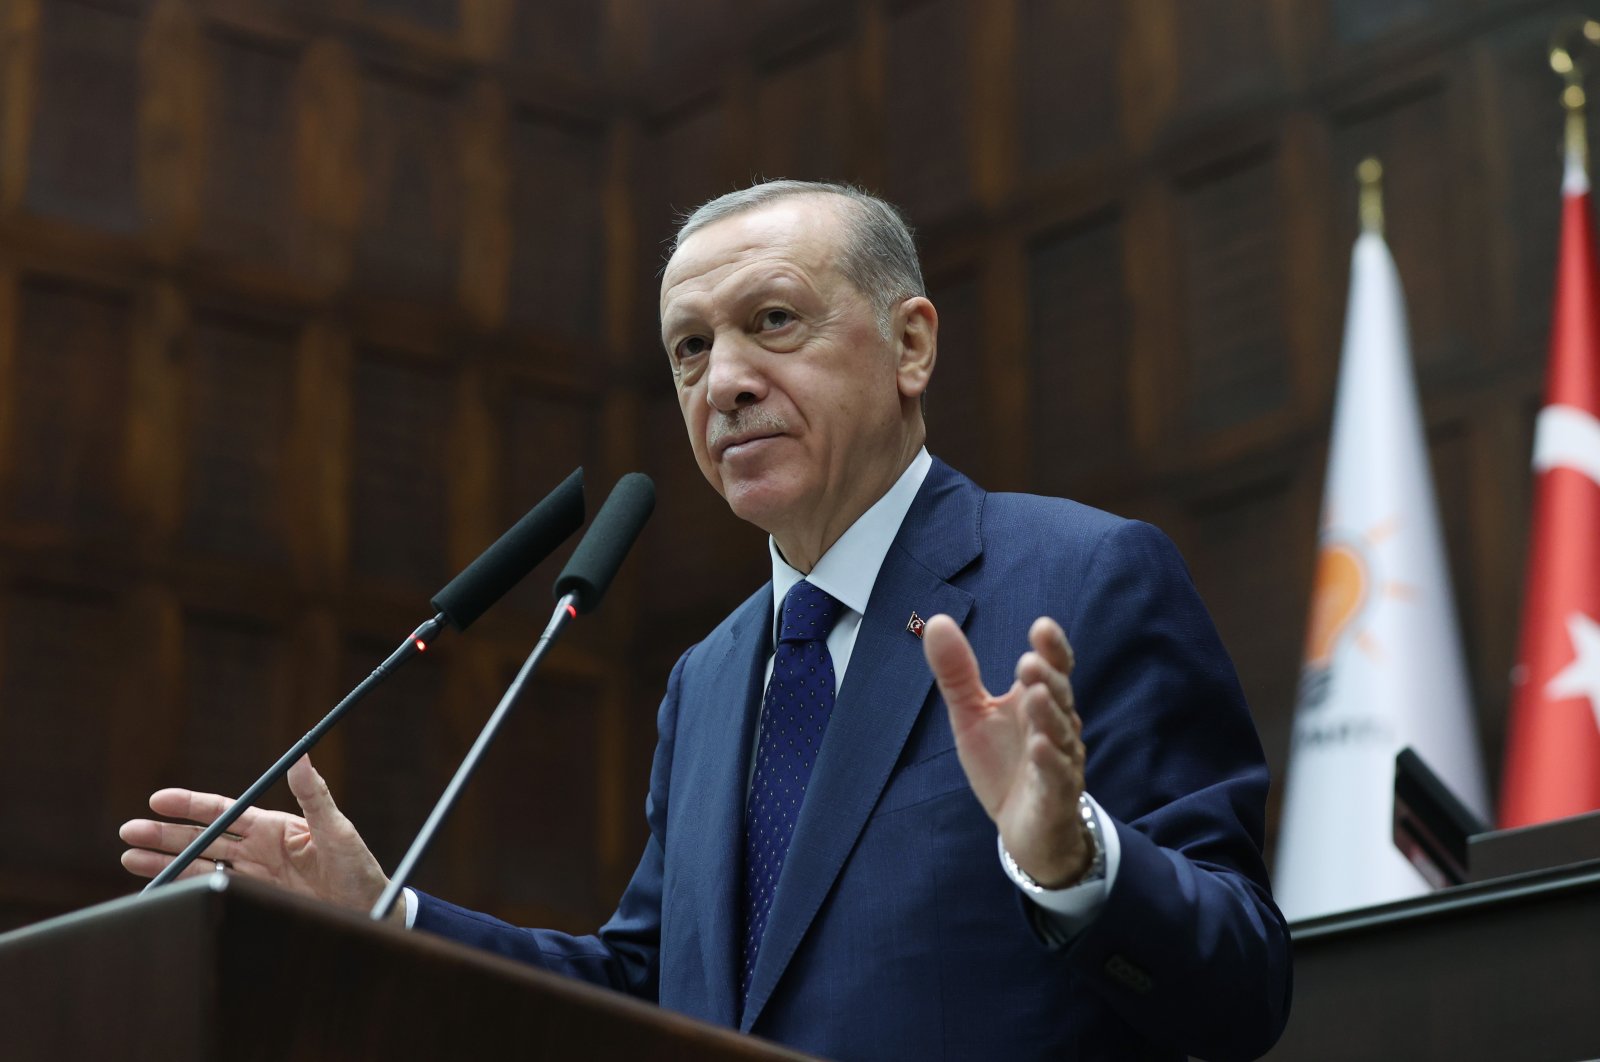 Türkiye menaikkan gaji pensiunan pegawai negeri sebesar 30%: Erdogan